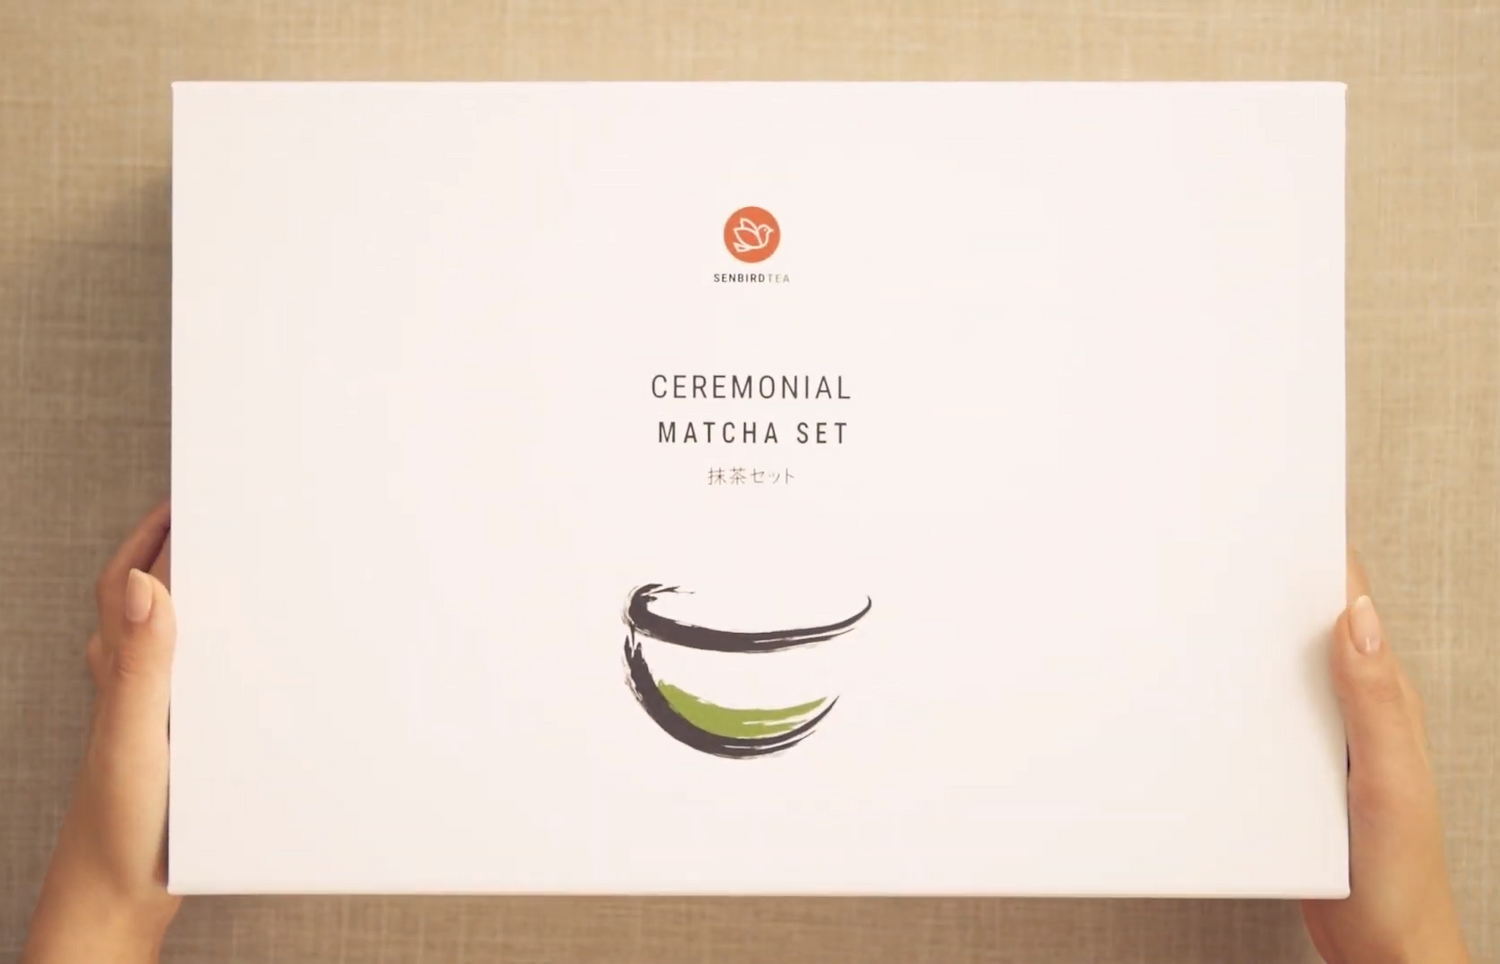 complate box of ceremonial matcha set